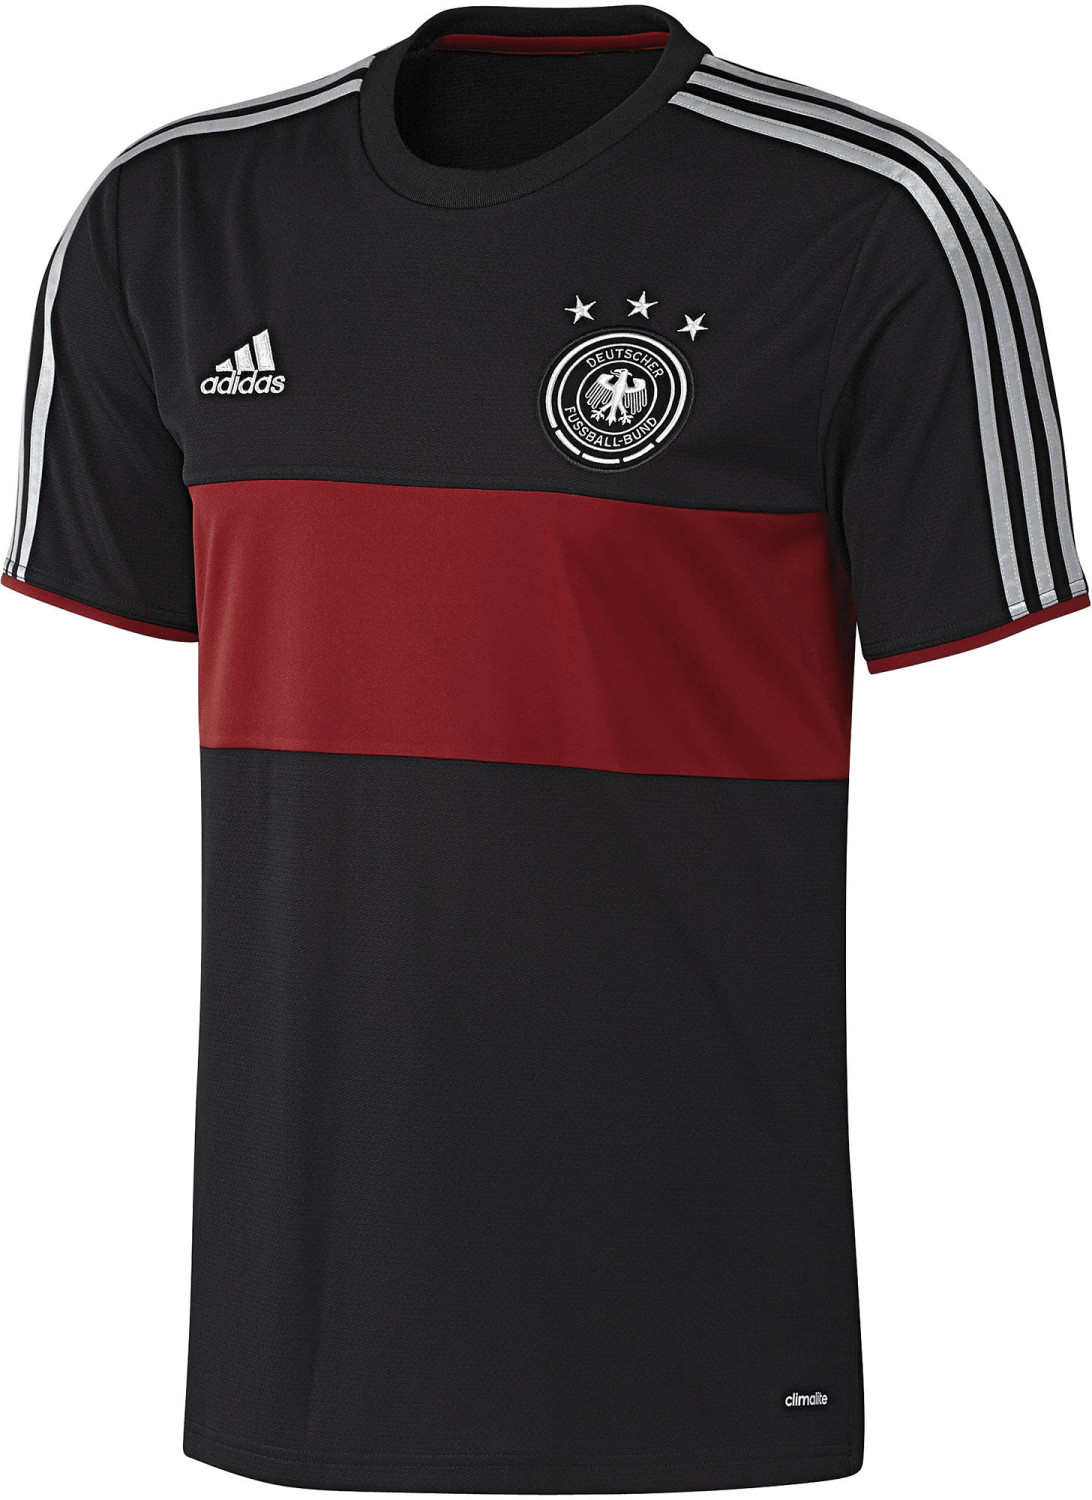 Adidas Deutschland Away Replica Trikot 2013/2014